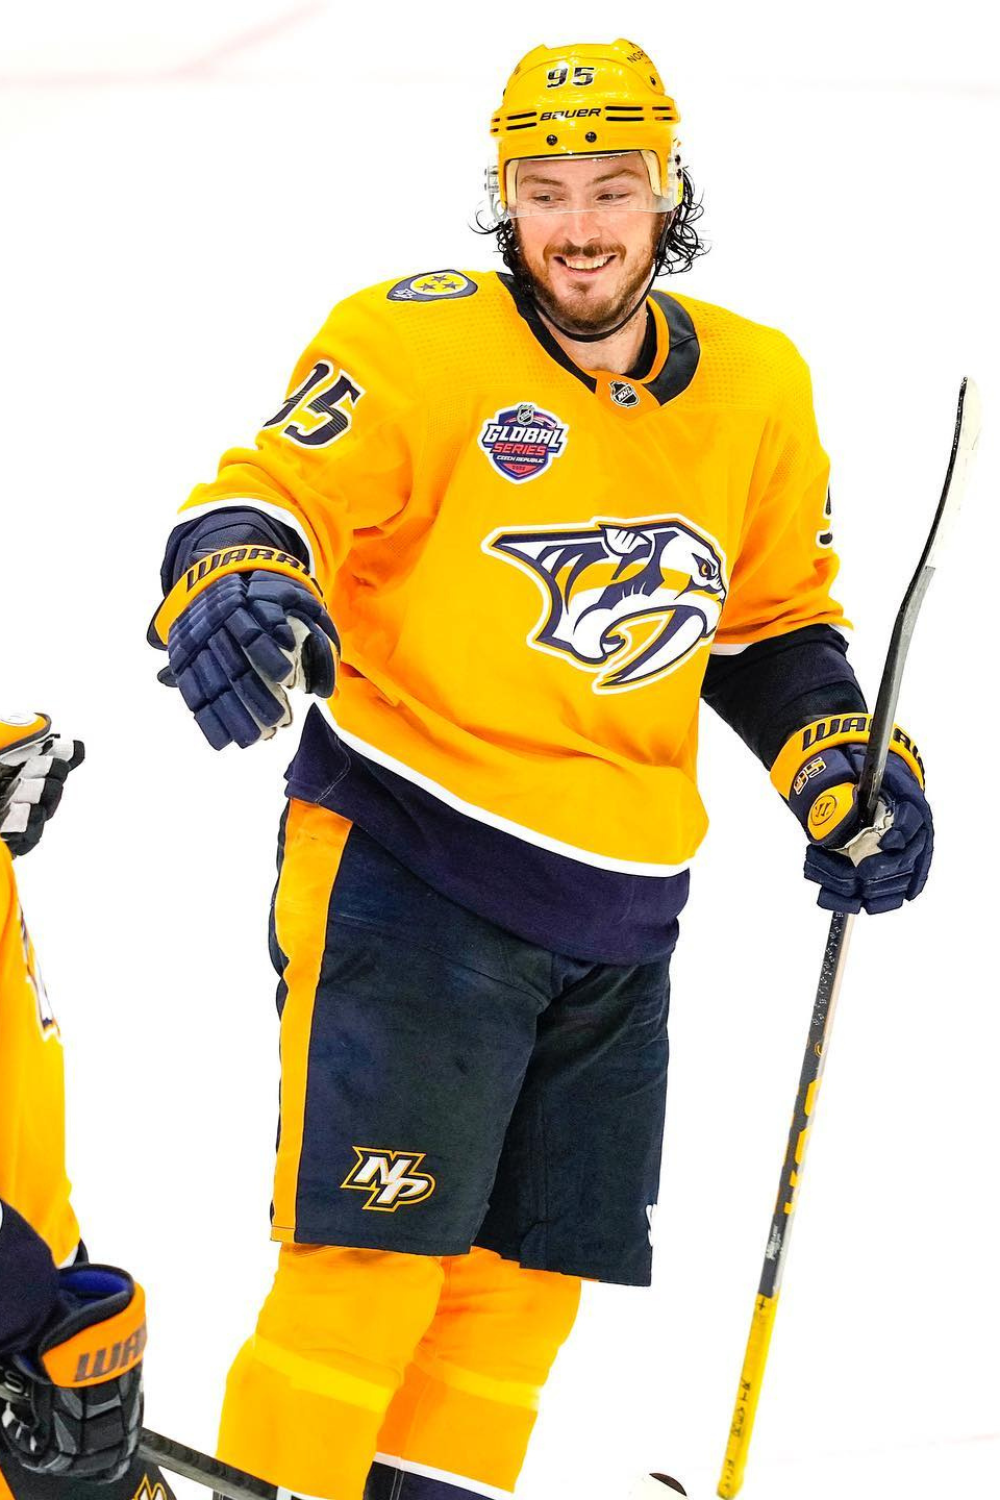 Matt Duchene, A Professional Ice Hockey Player